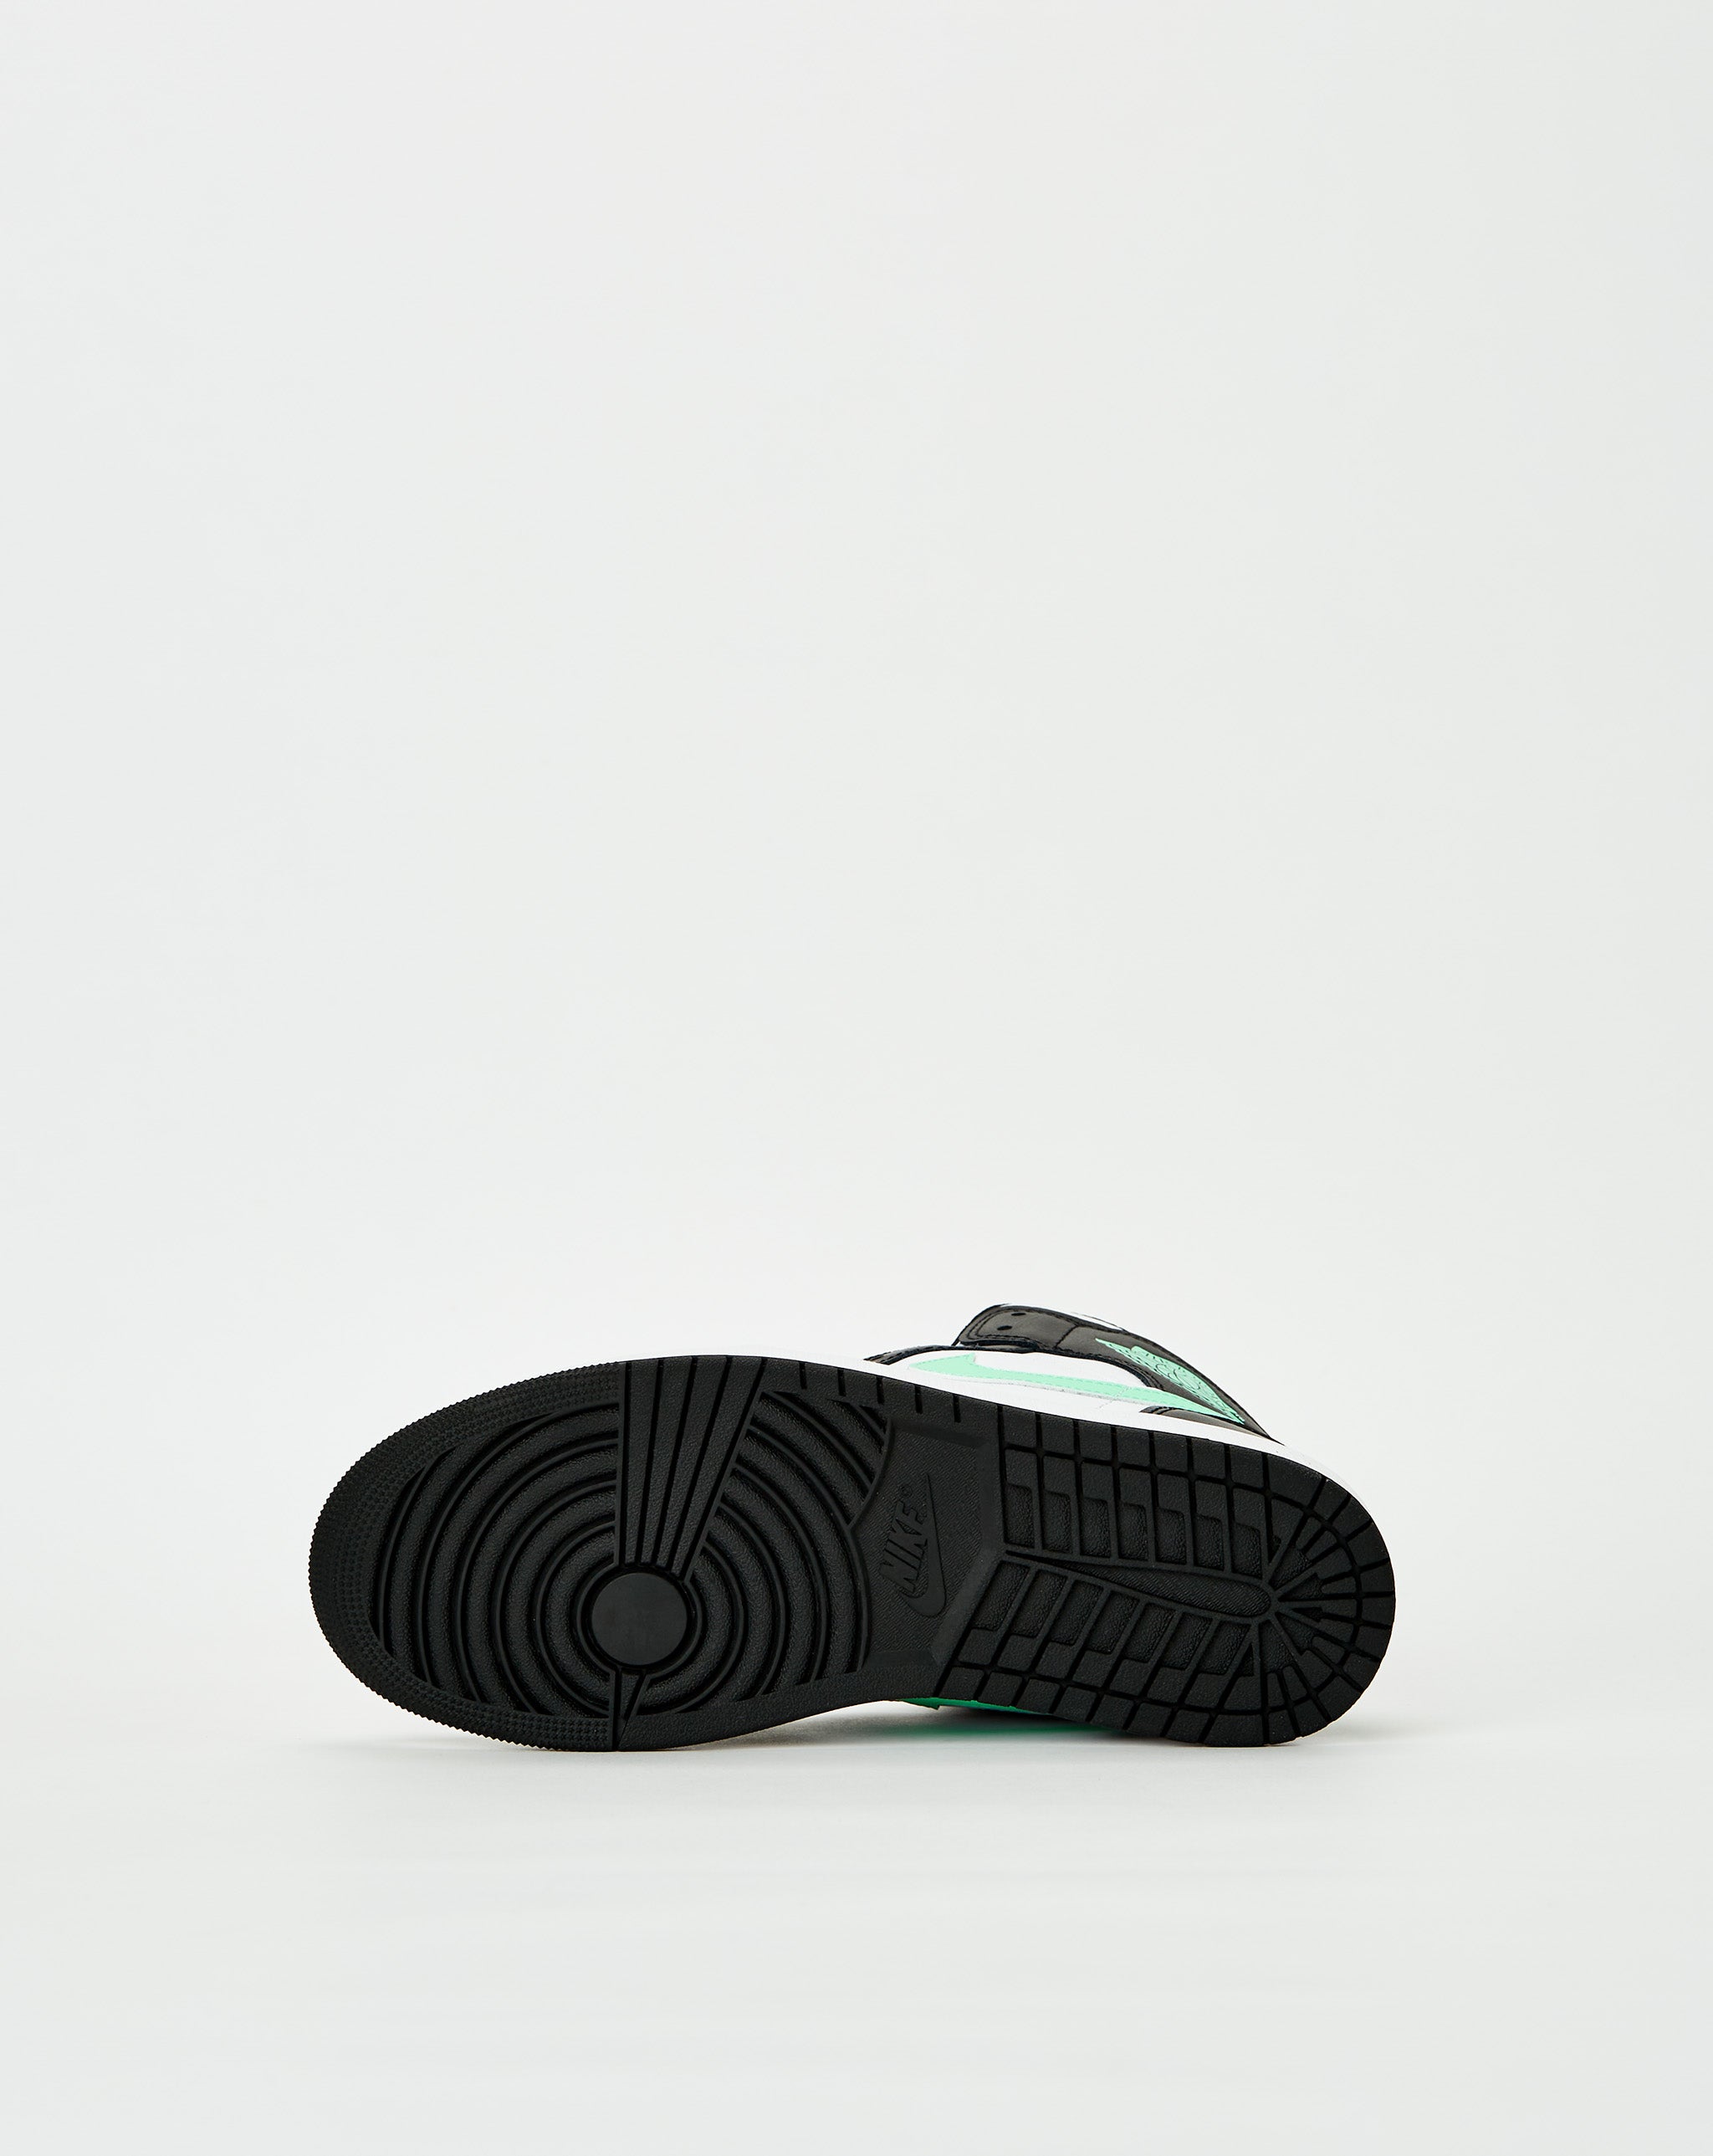 Air Jordan Sneakers and shoes Nike Blazer Mid on sale  - Cheap Urlfreeze Jordan outlet